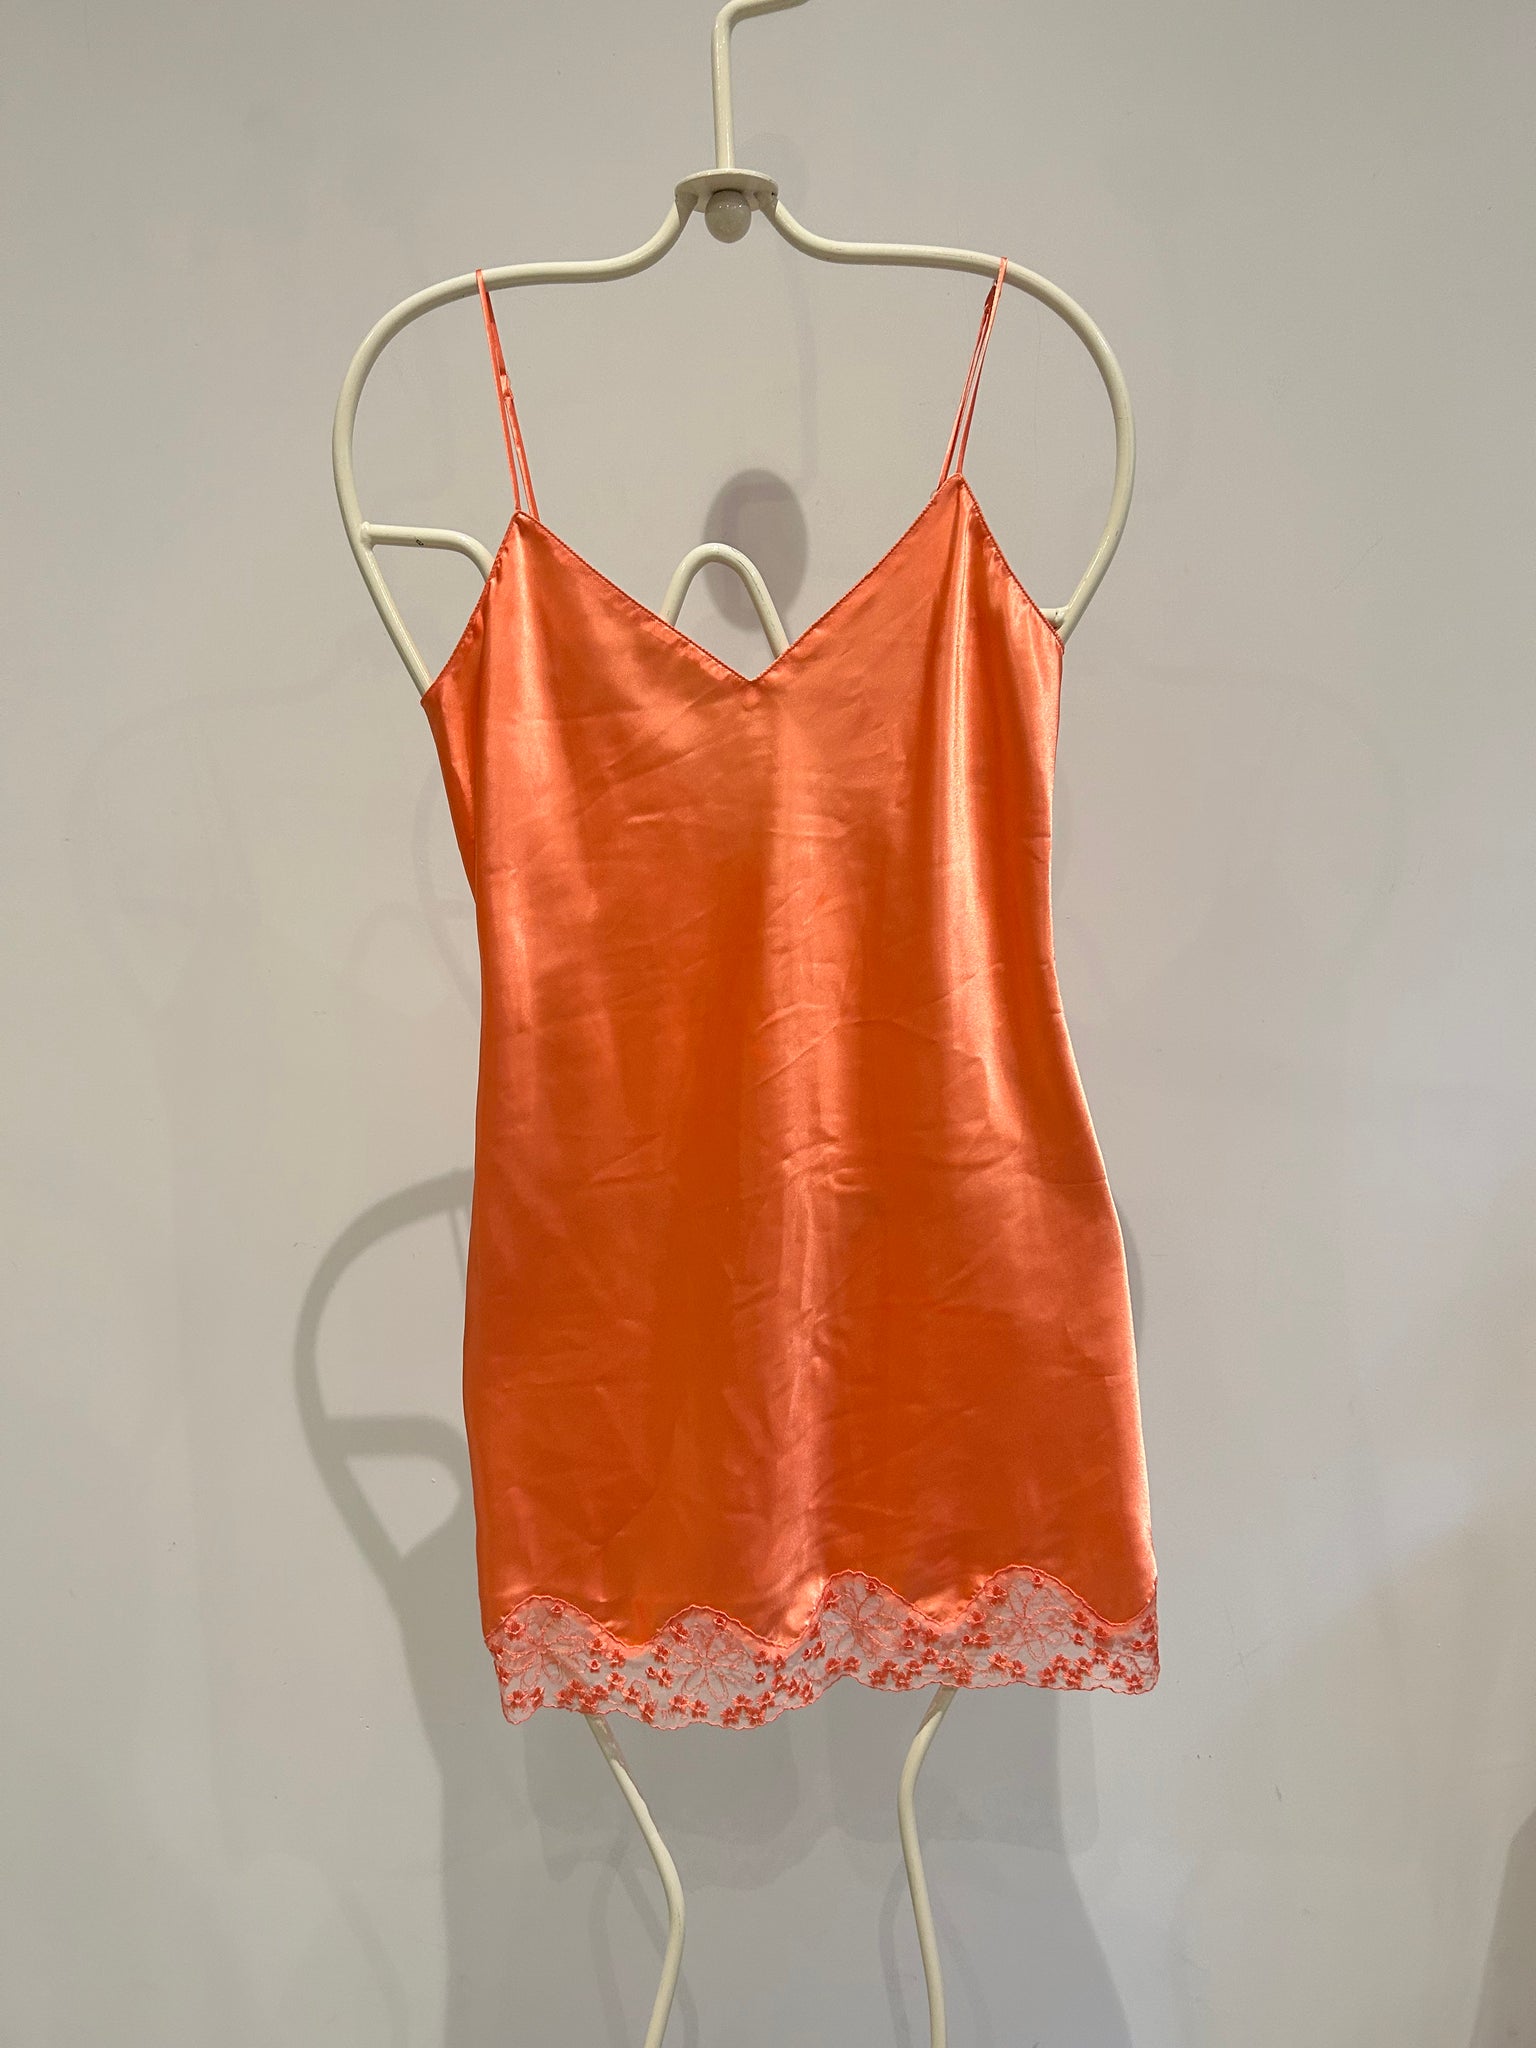 Thrifted vintage & pre-loved lingerie & slip dresses part 2